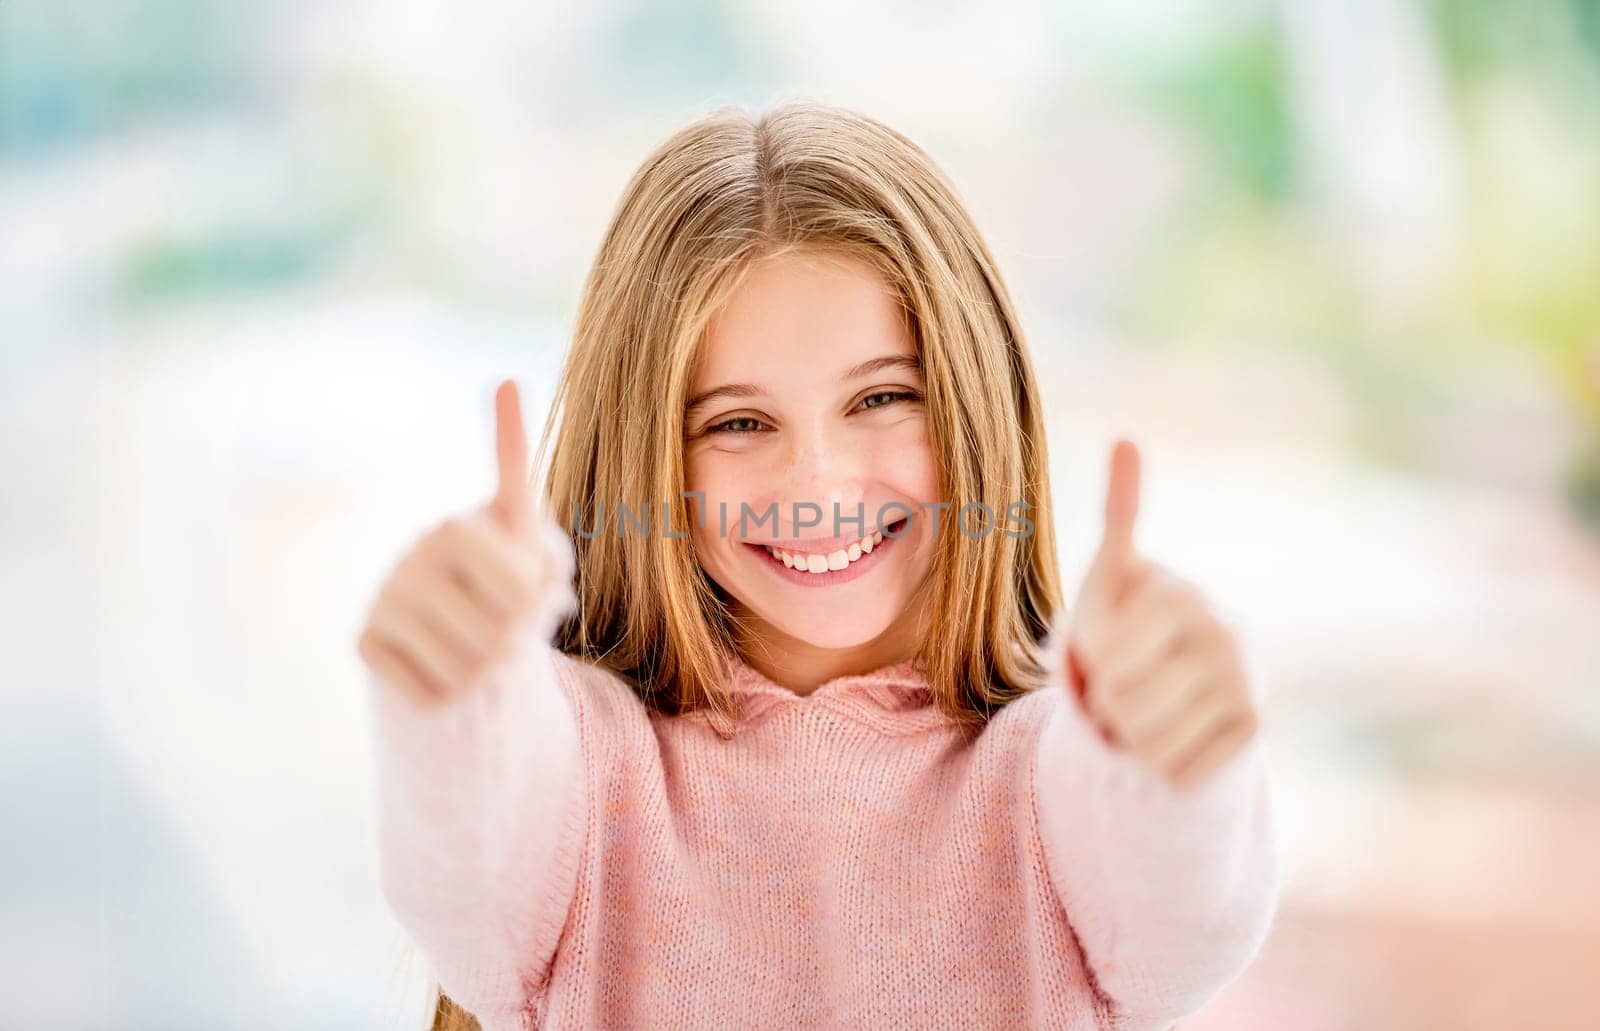 Cute little girl showing sign super by tan4ikk1